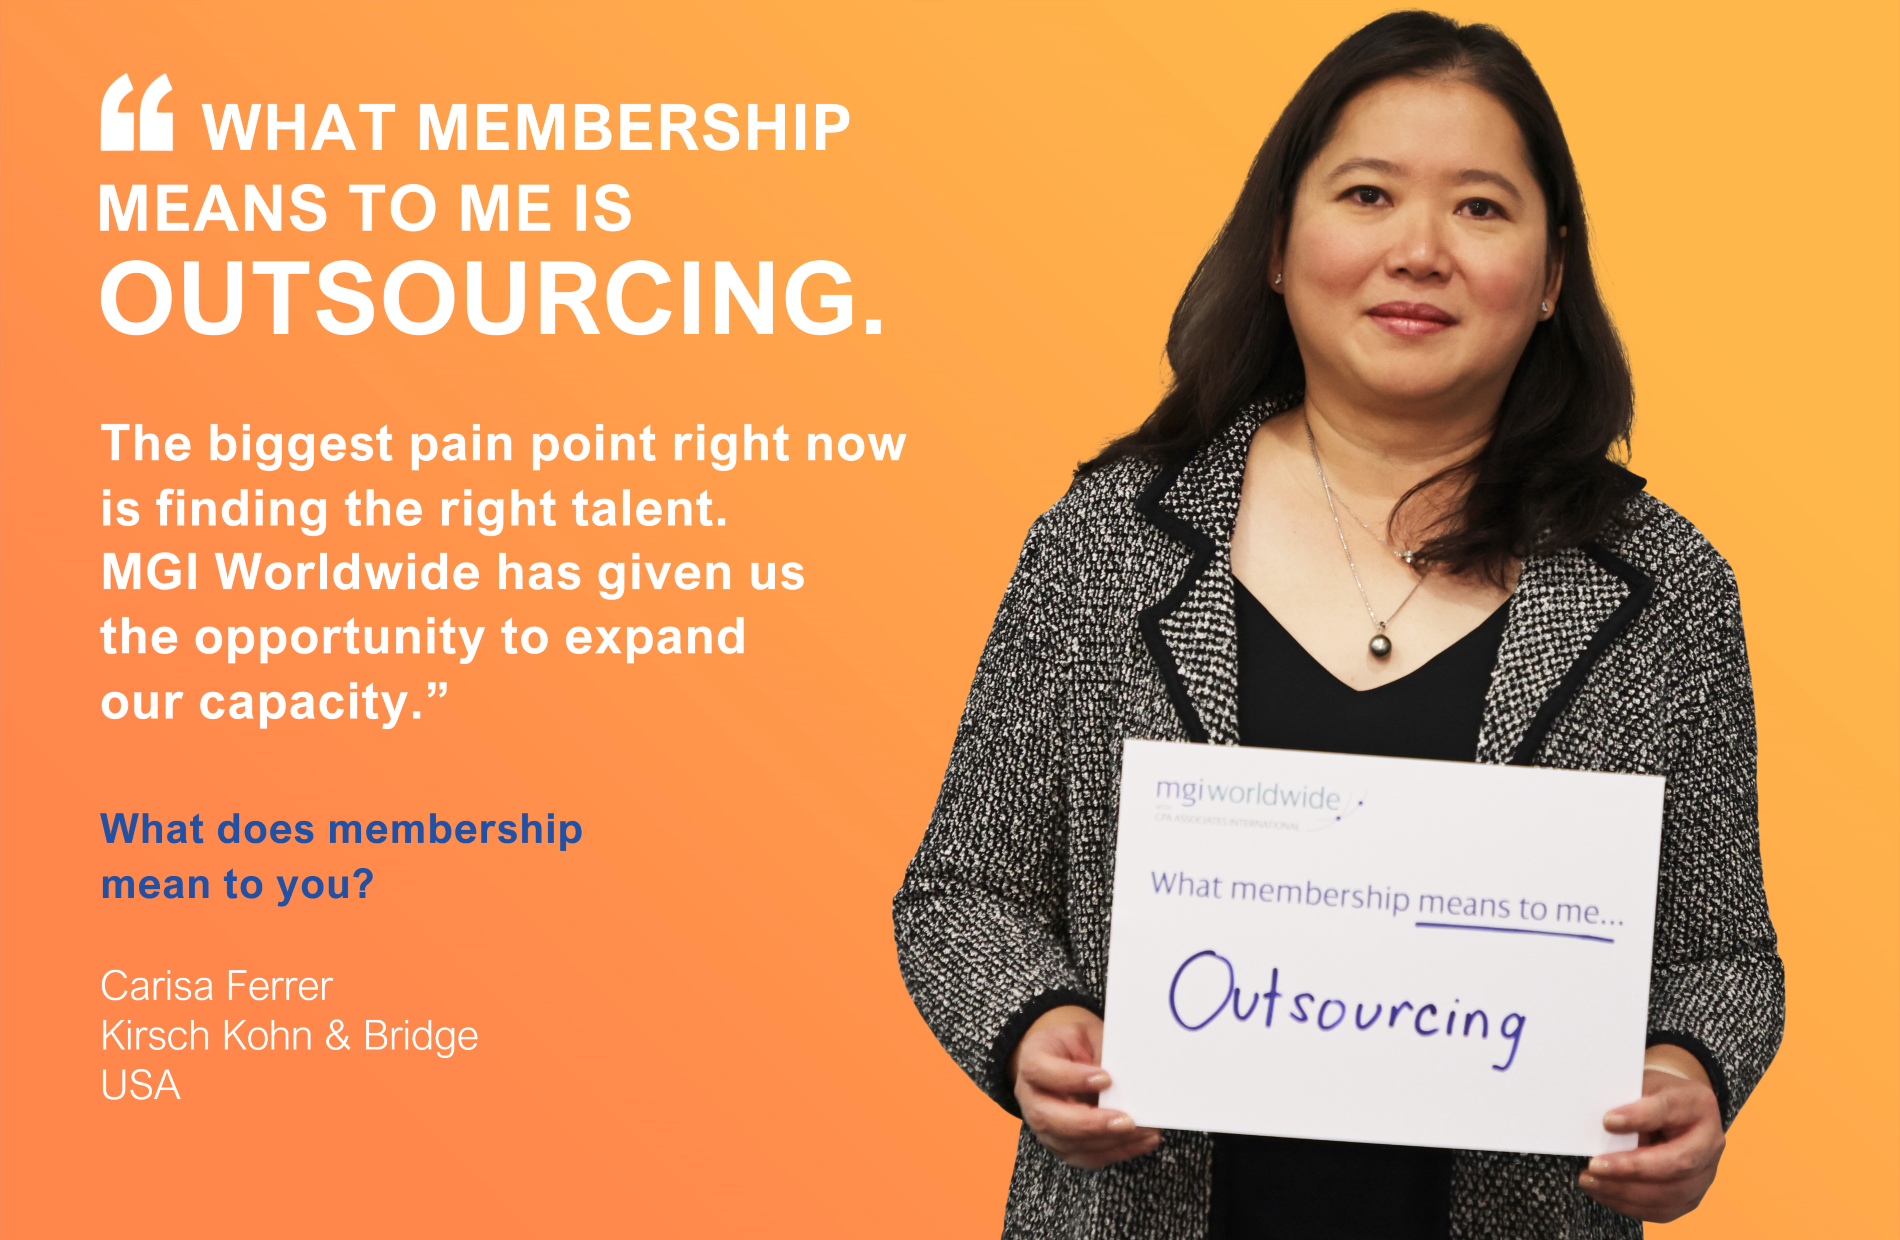 Membership means Outsourcing to Carisa Ferrer of Kirsch Kohn & Bridge, USA